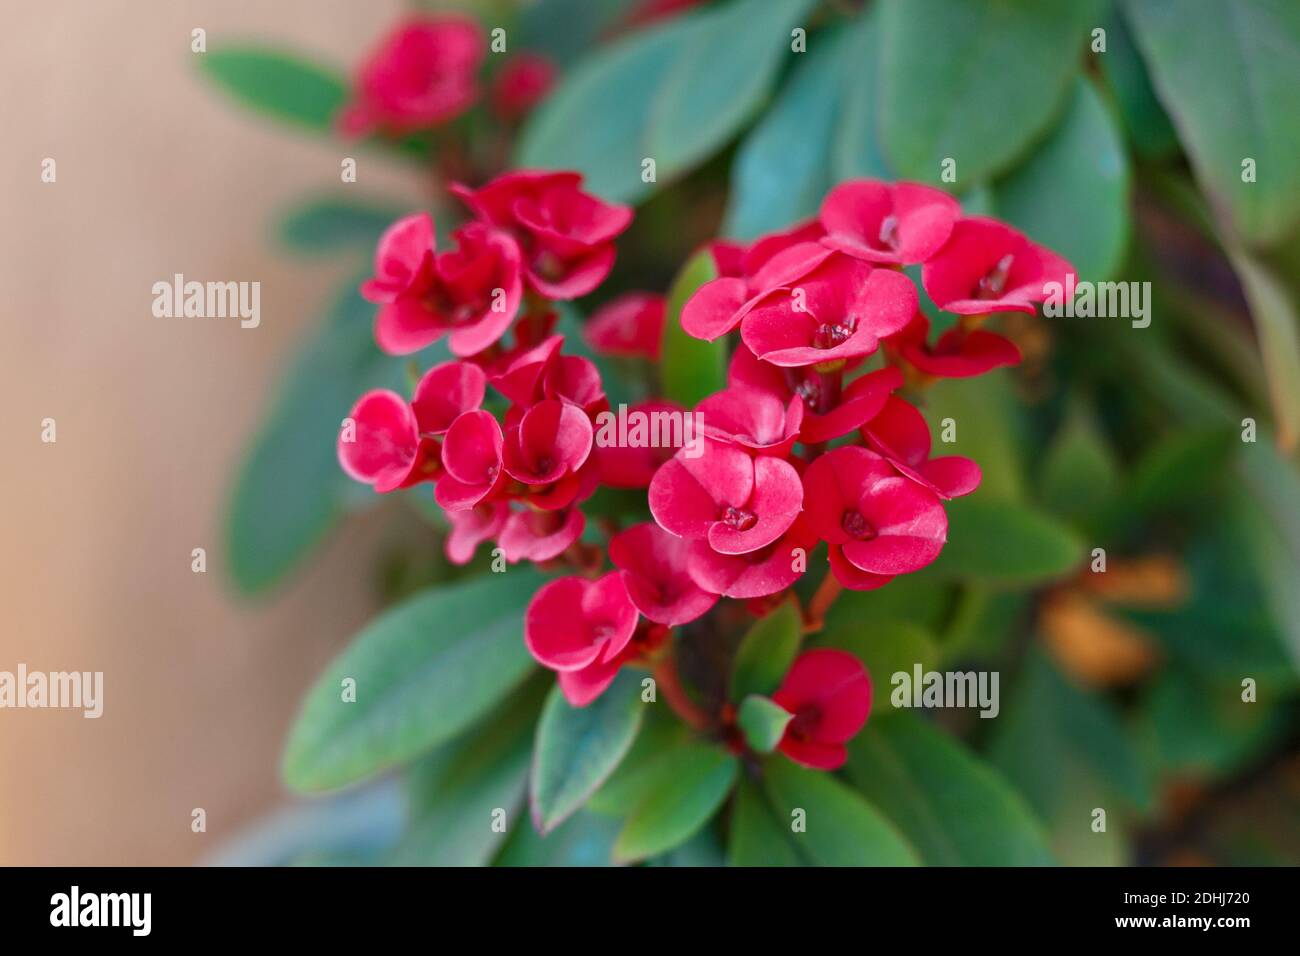 Euphorbia milii (Dornenkrone). Pflanze im Blumentopf. Weihnachtsblume  Stockfotografie - Alamy